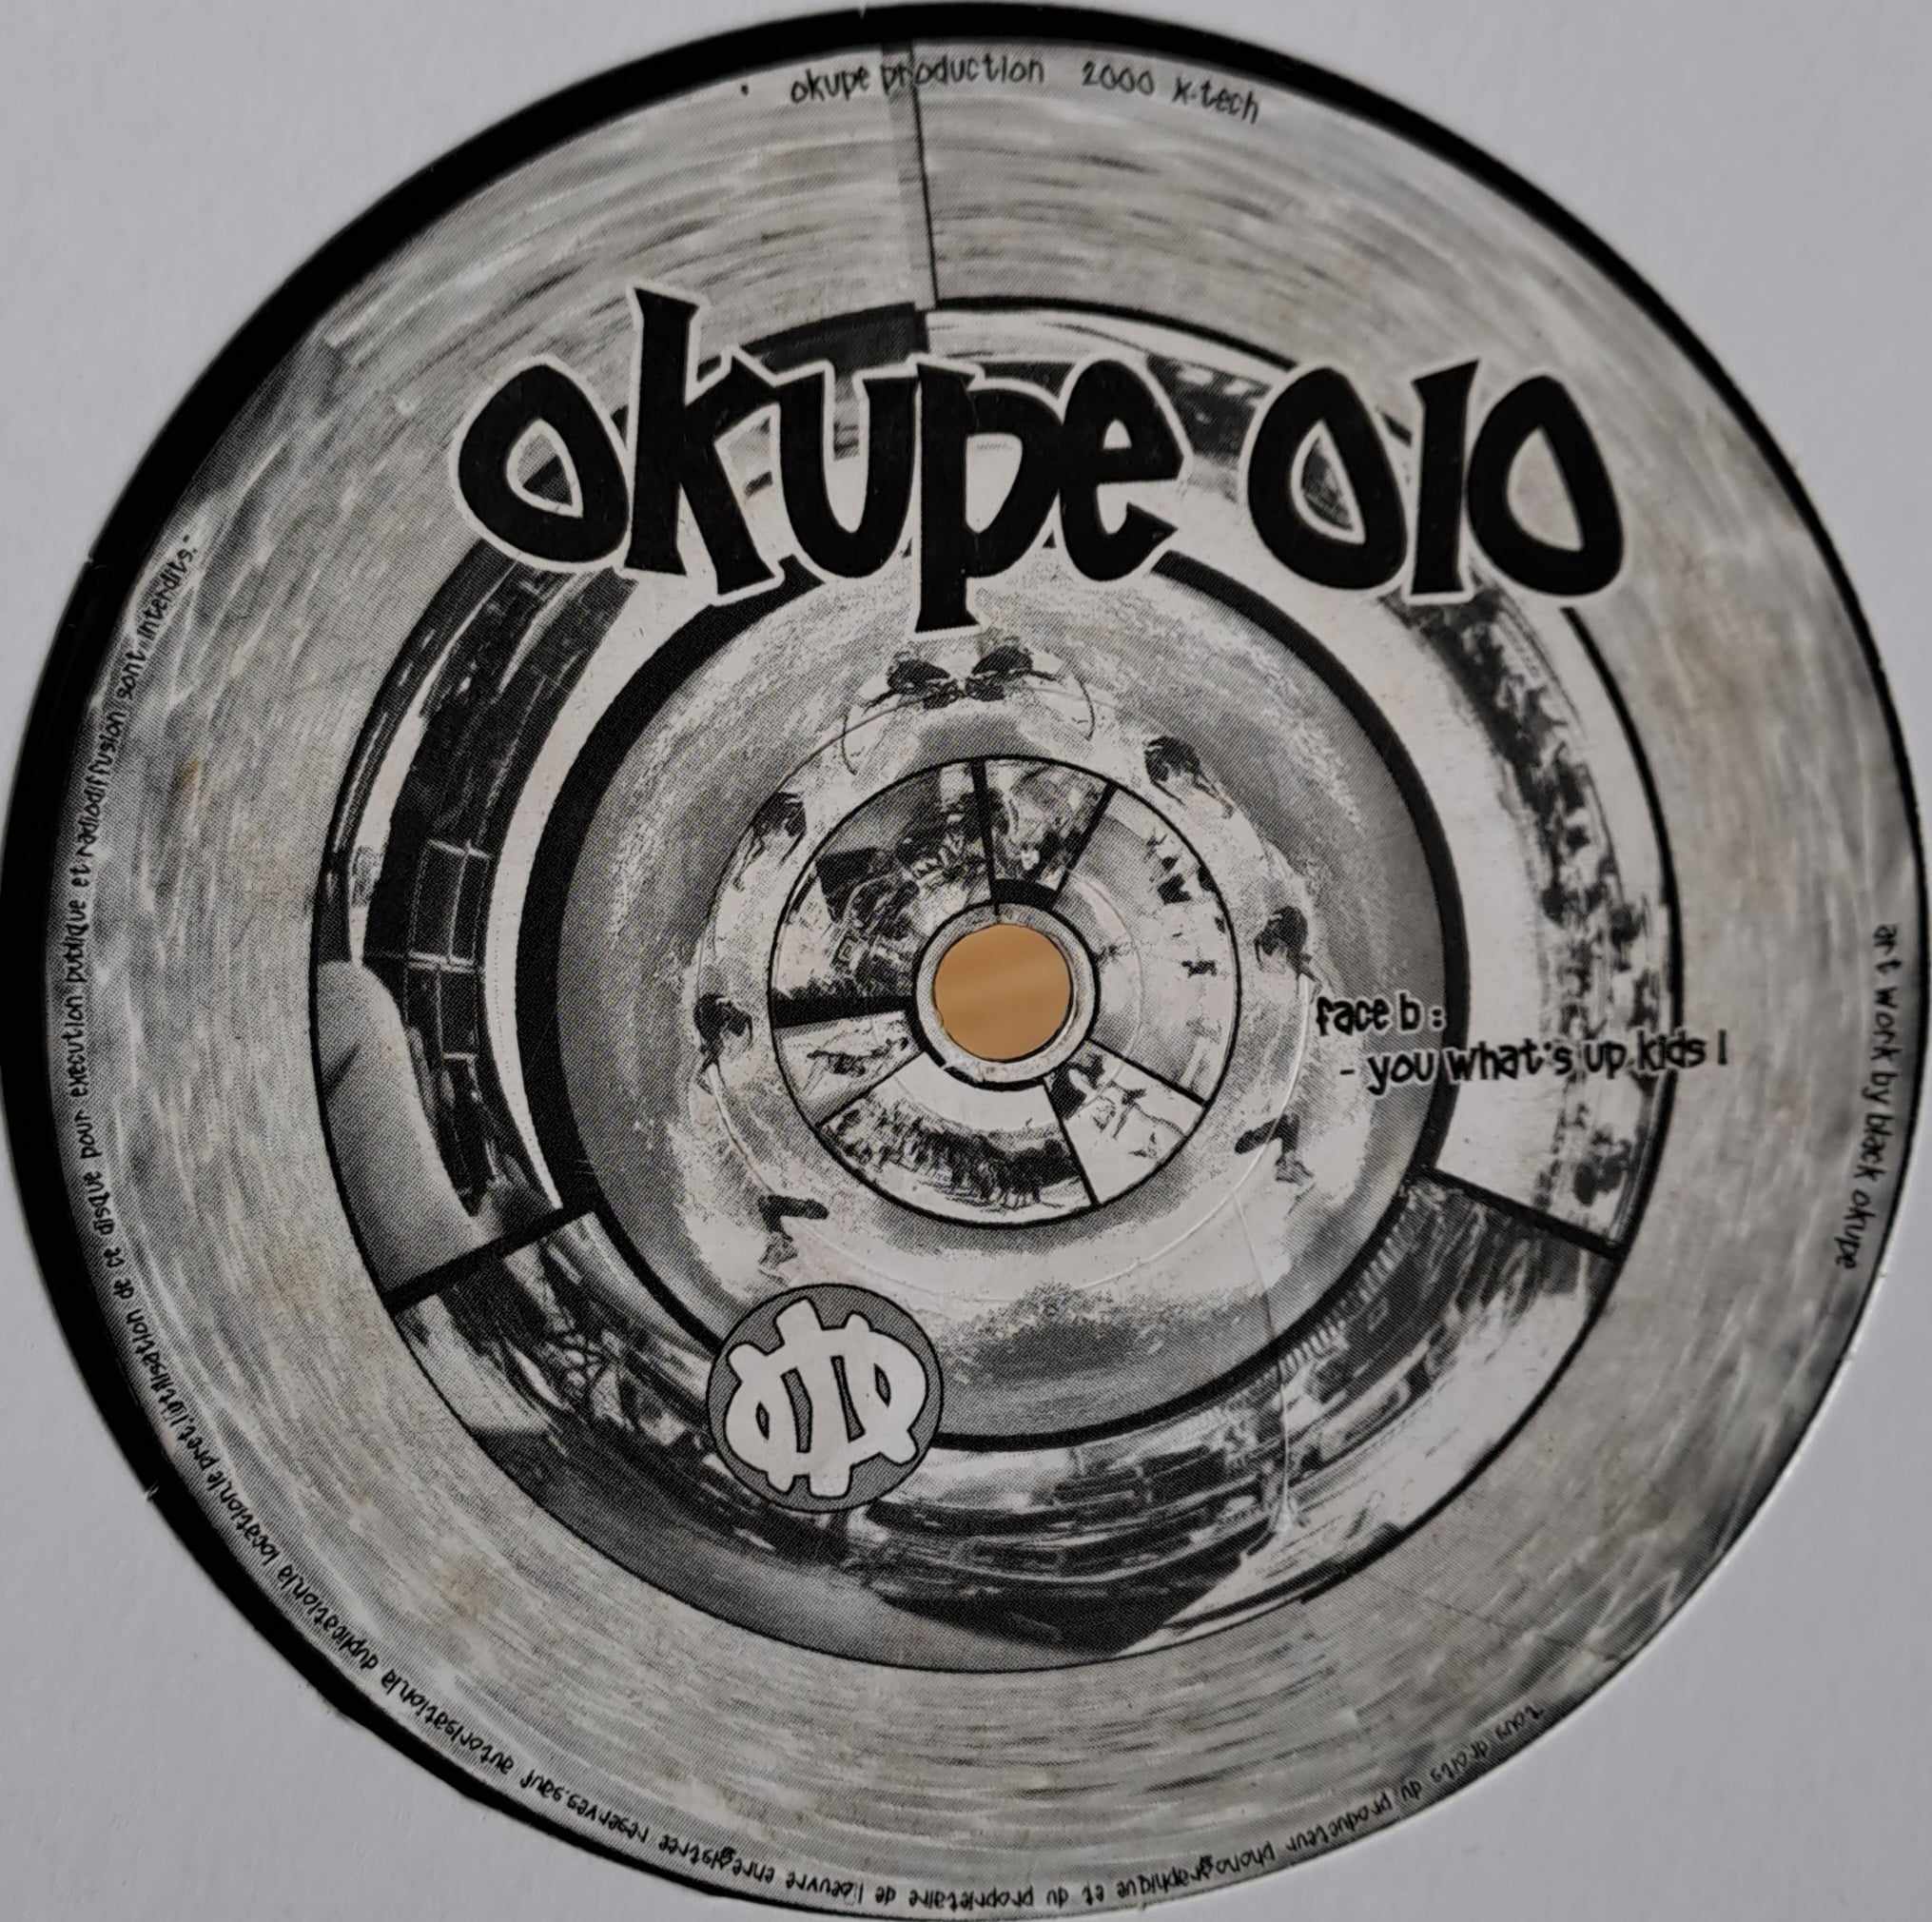 Okupe 010 - vinyle freetekno